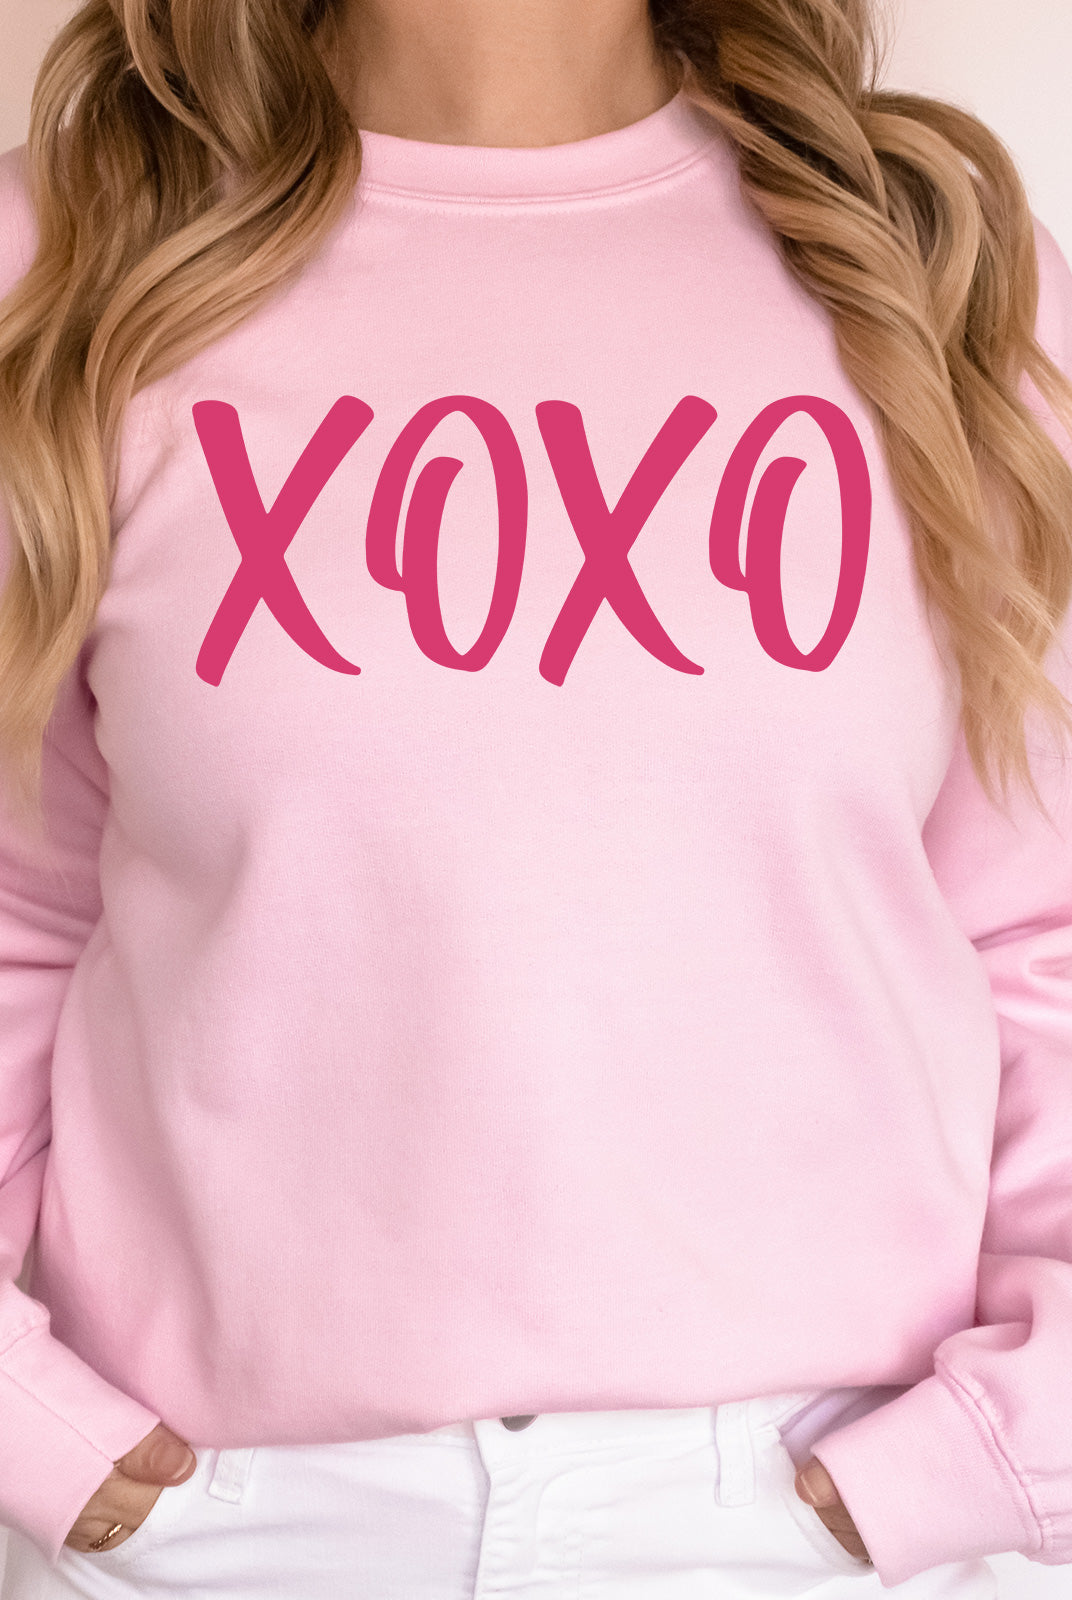 girl wearing pink sweatshirt